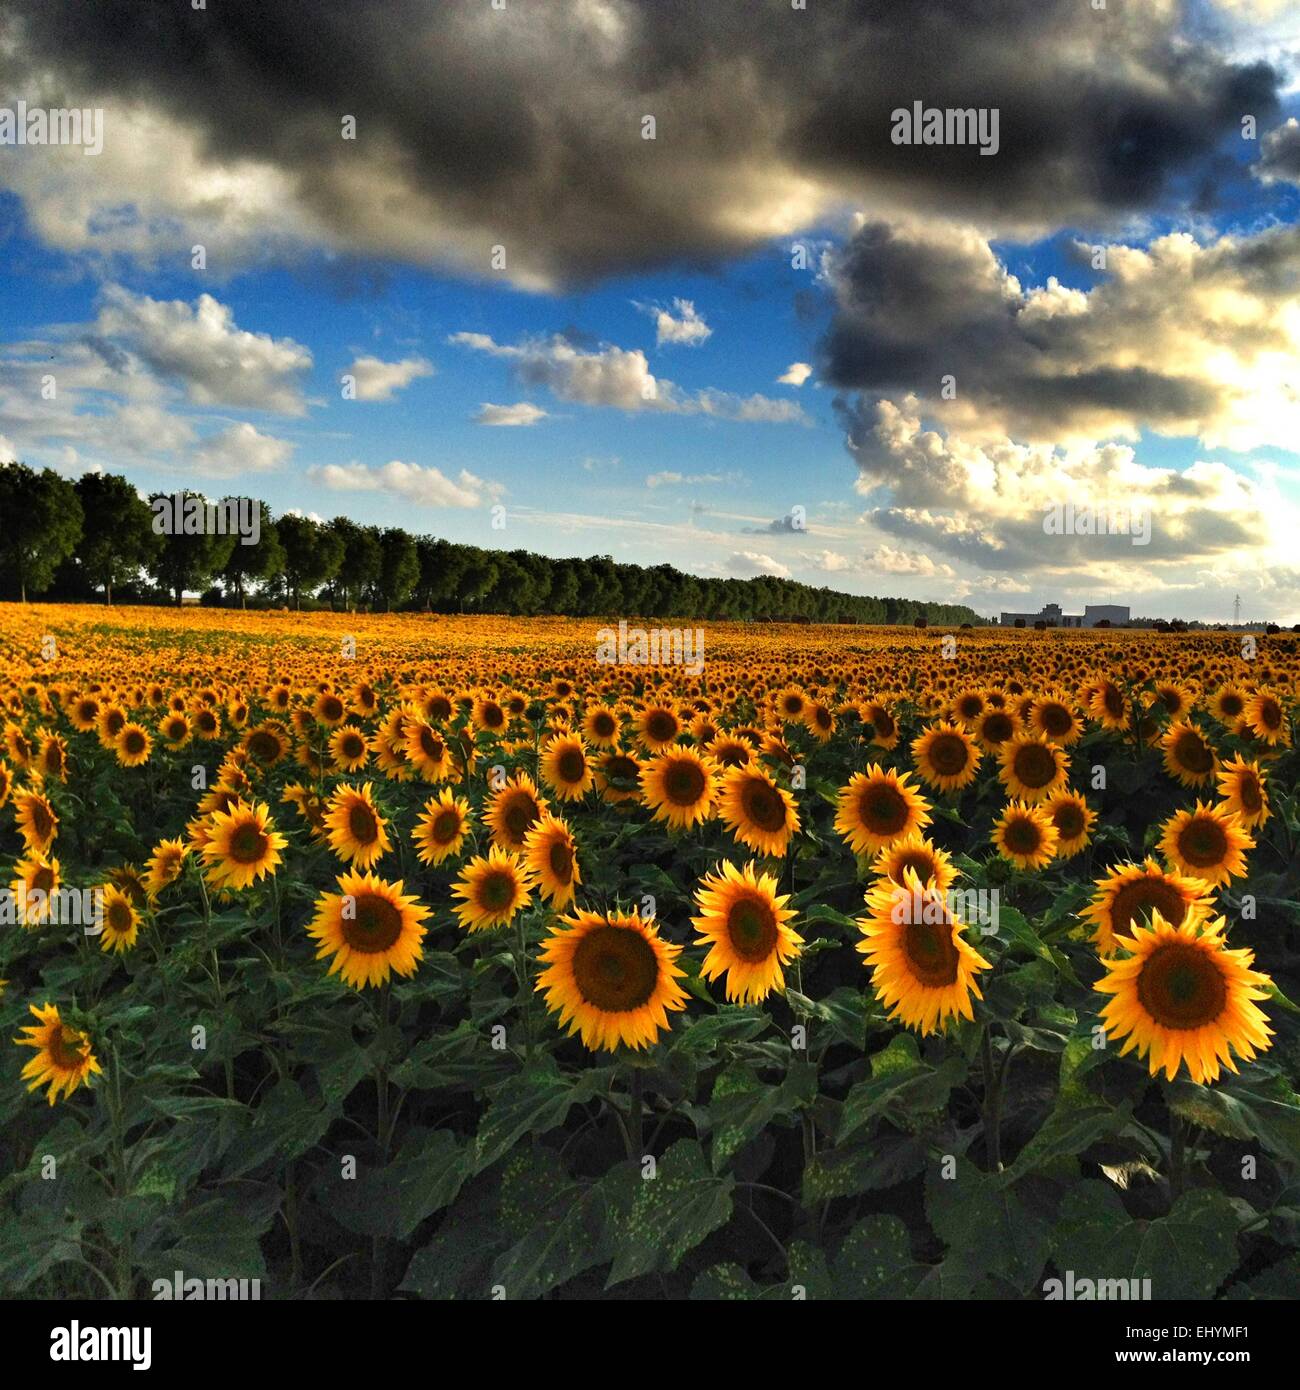 Field of sunflowers, Chauray, Niort, France Stock Photo